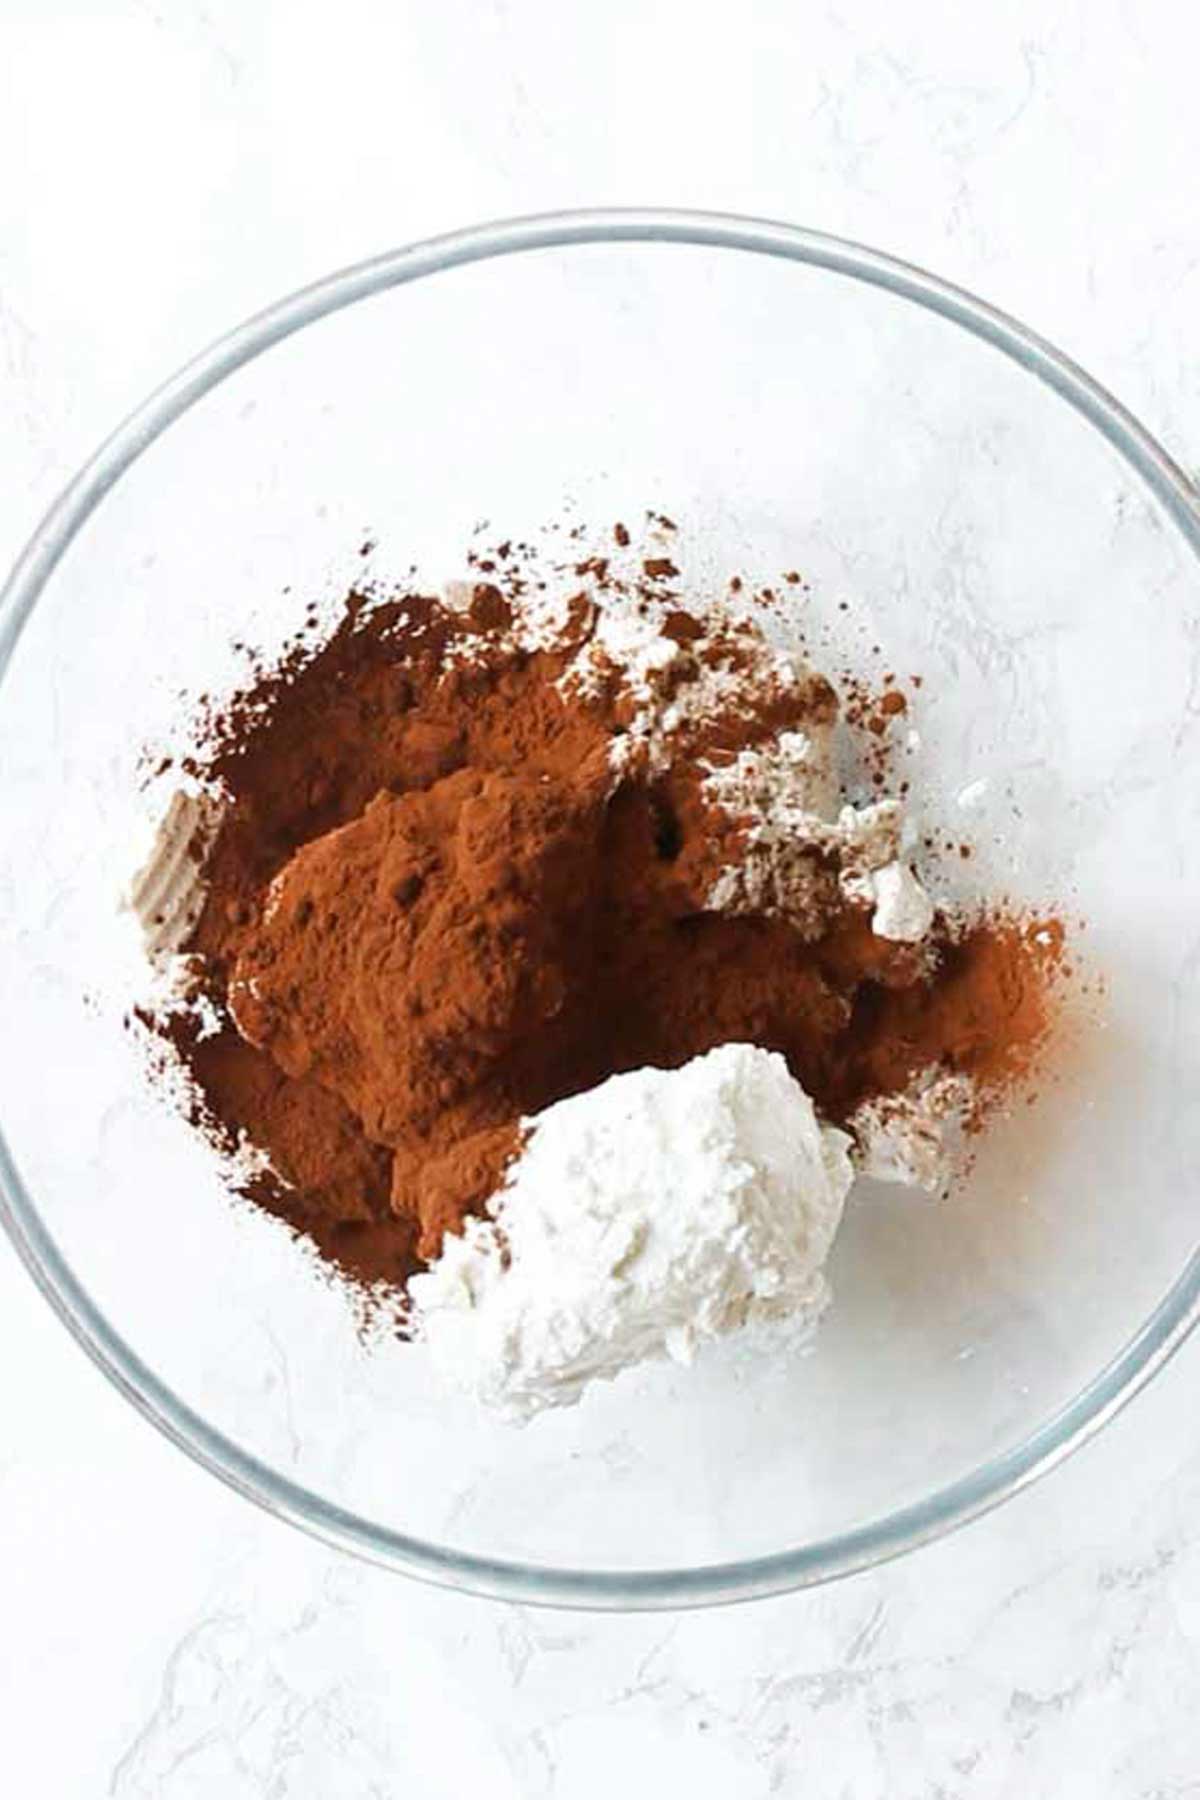 Coconut Milk And Cocoa Powder In A Bowl